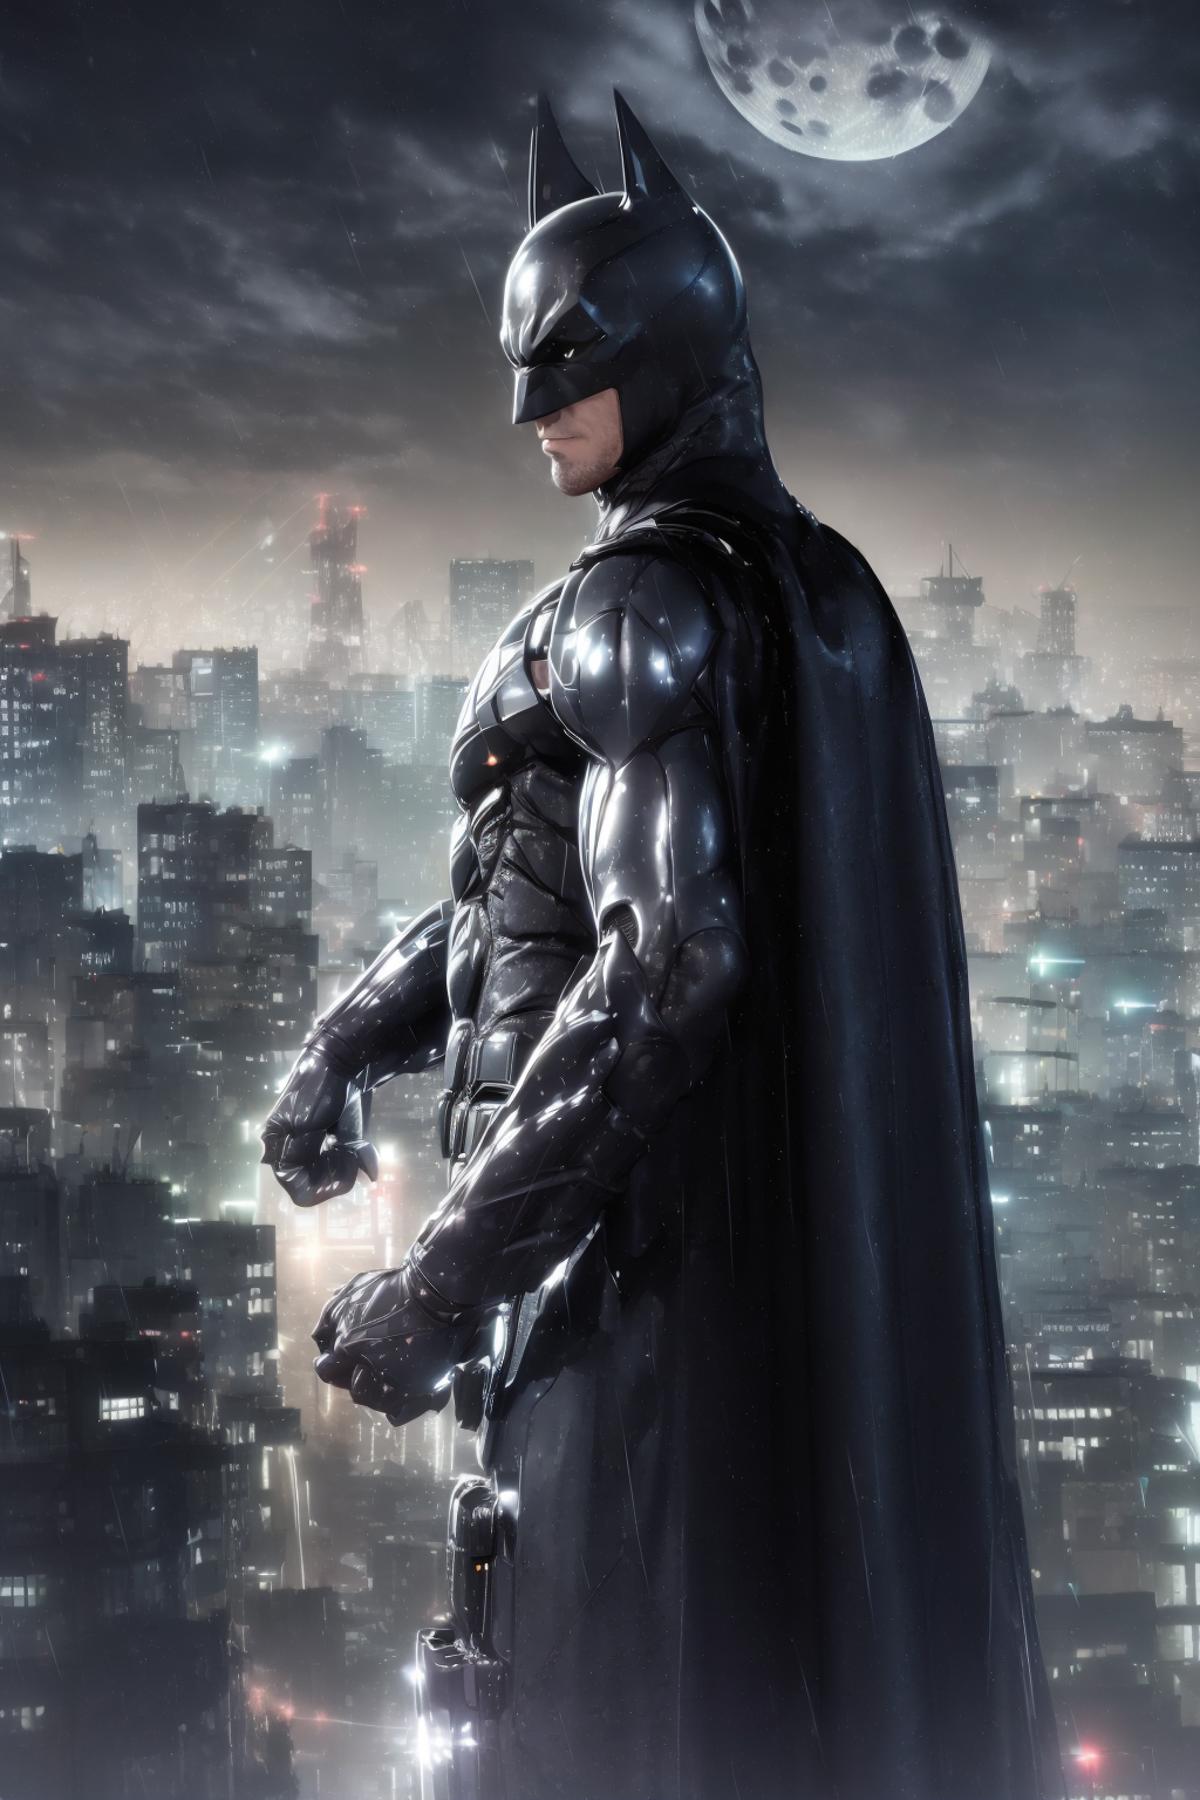 【KK_REAL】Batman 蝙蝠俠 バットマン image by Kisaku_KK77